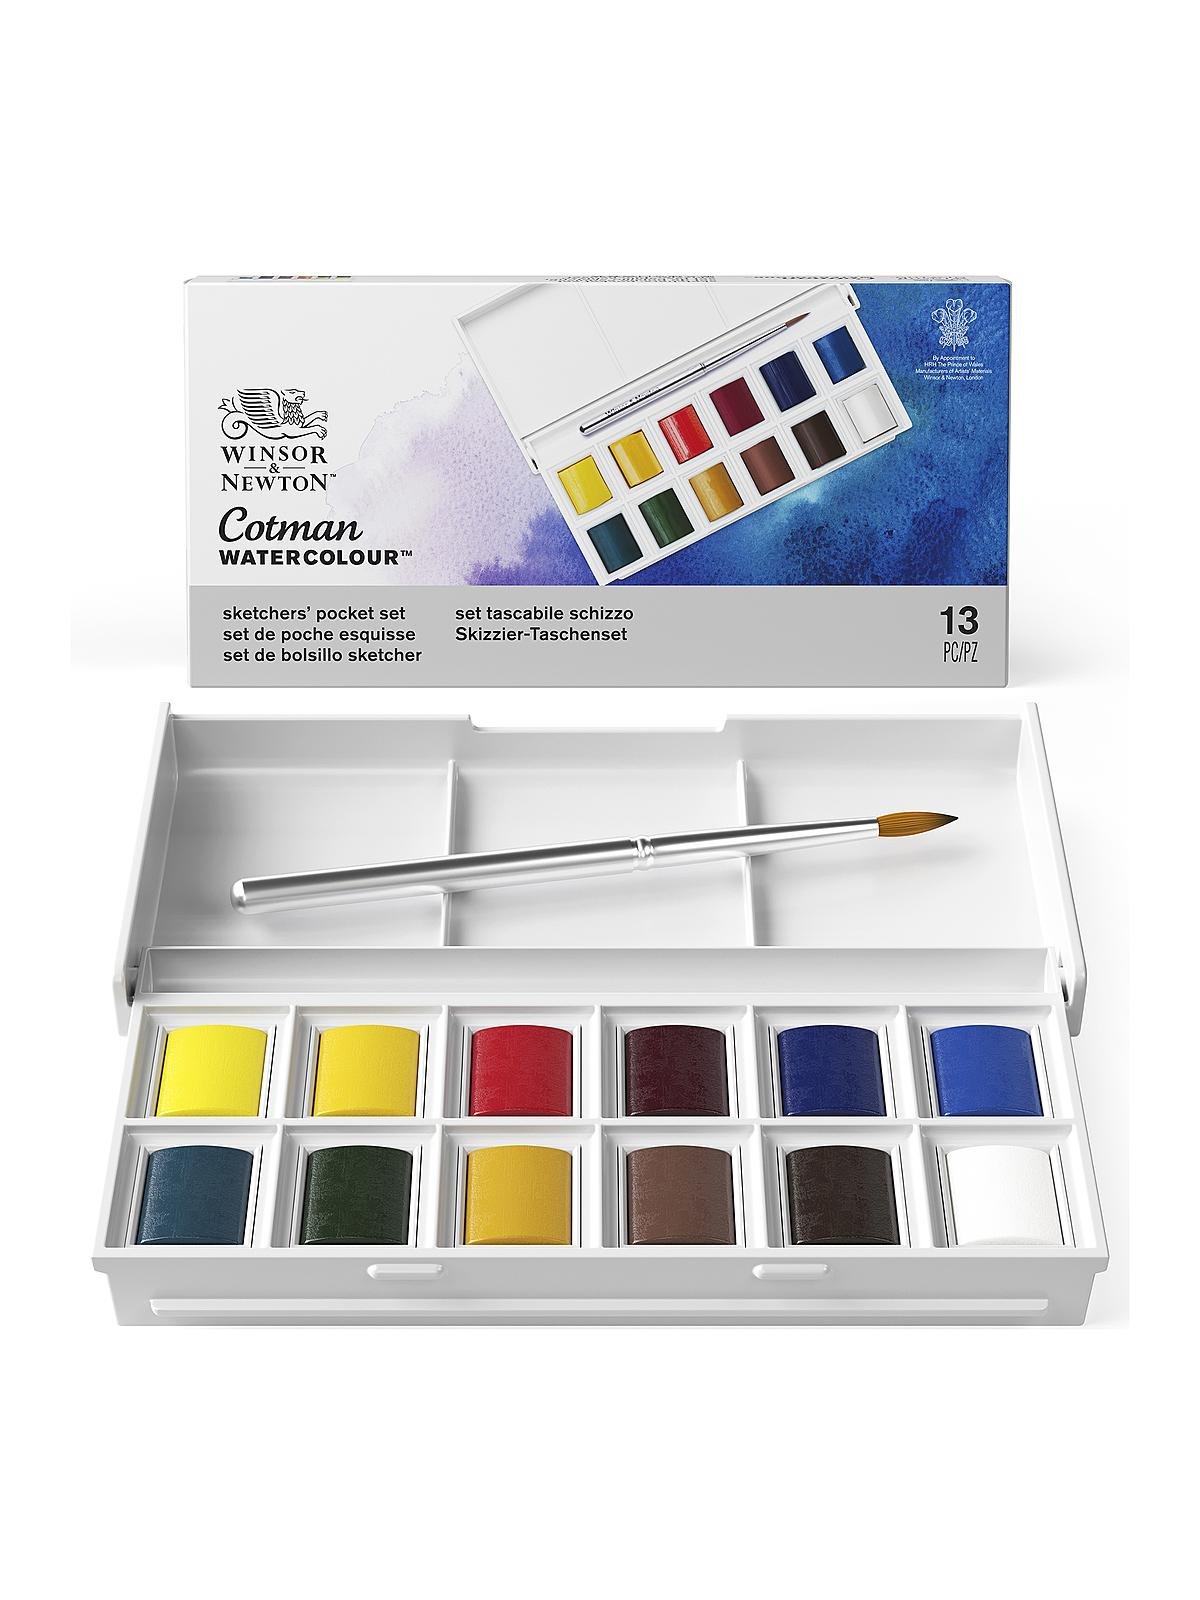 Winsor & Newton - Cotman Water Colour Sketchers' Pocket Box